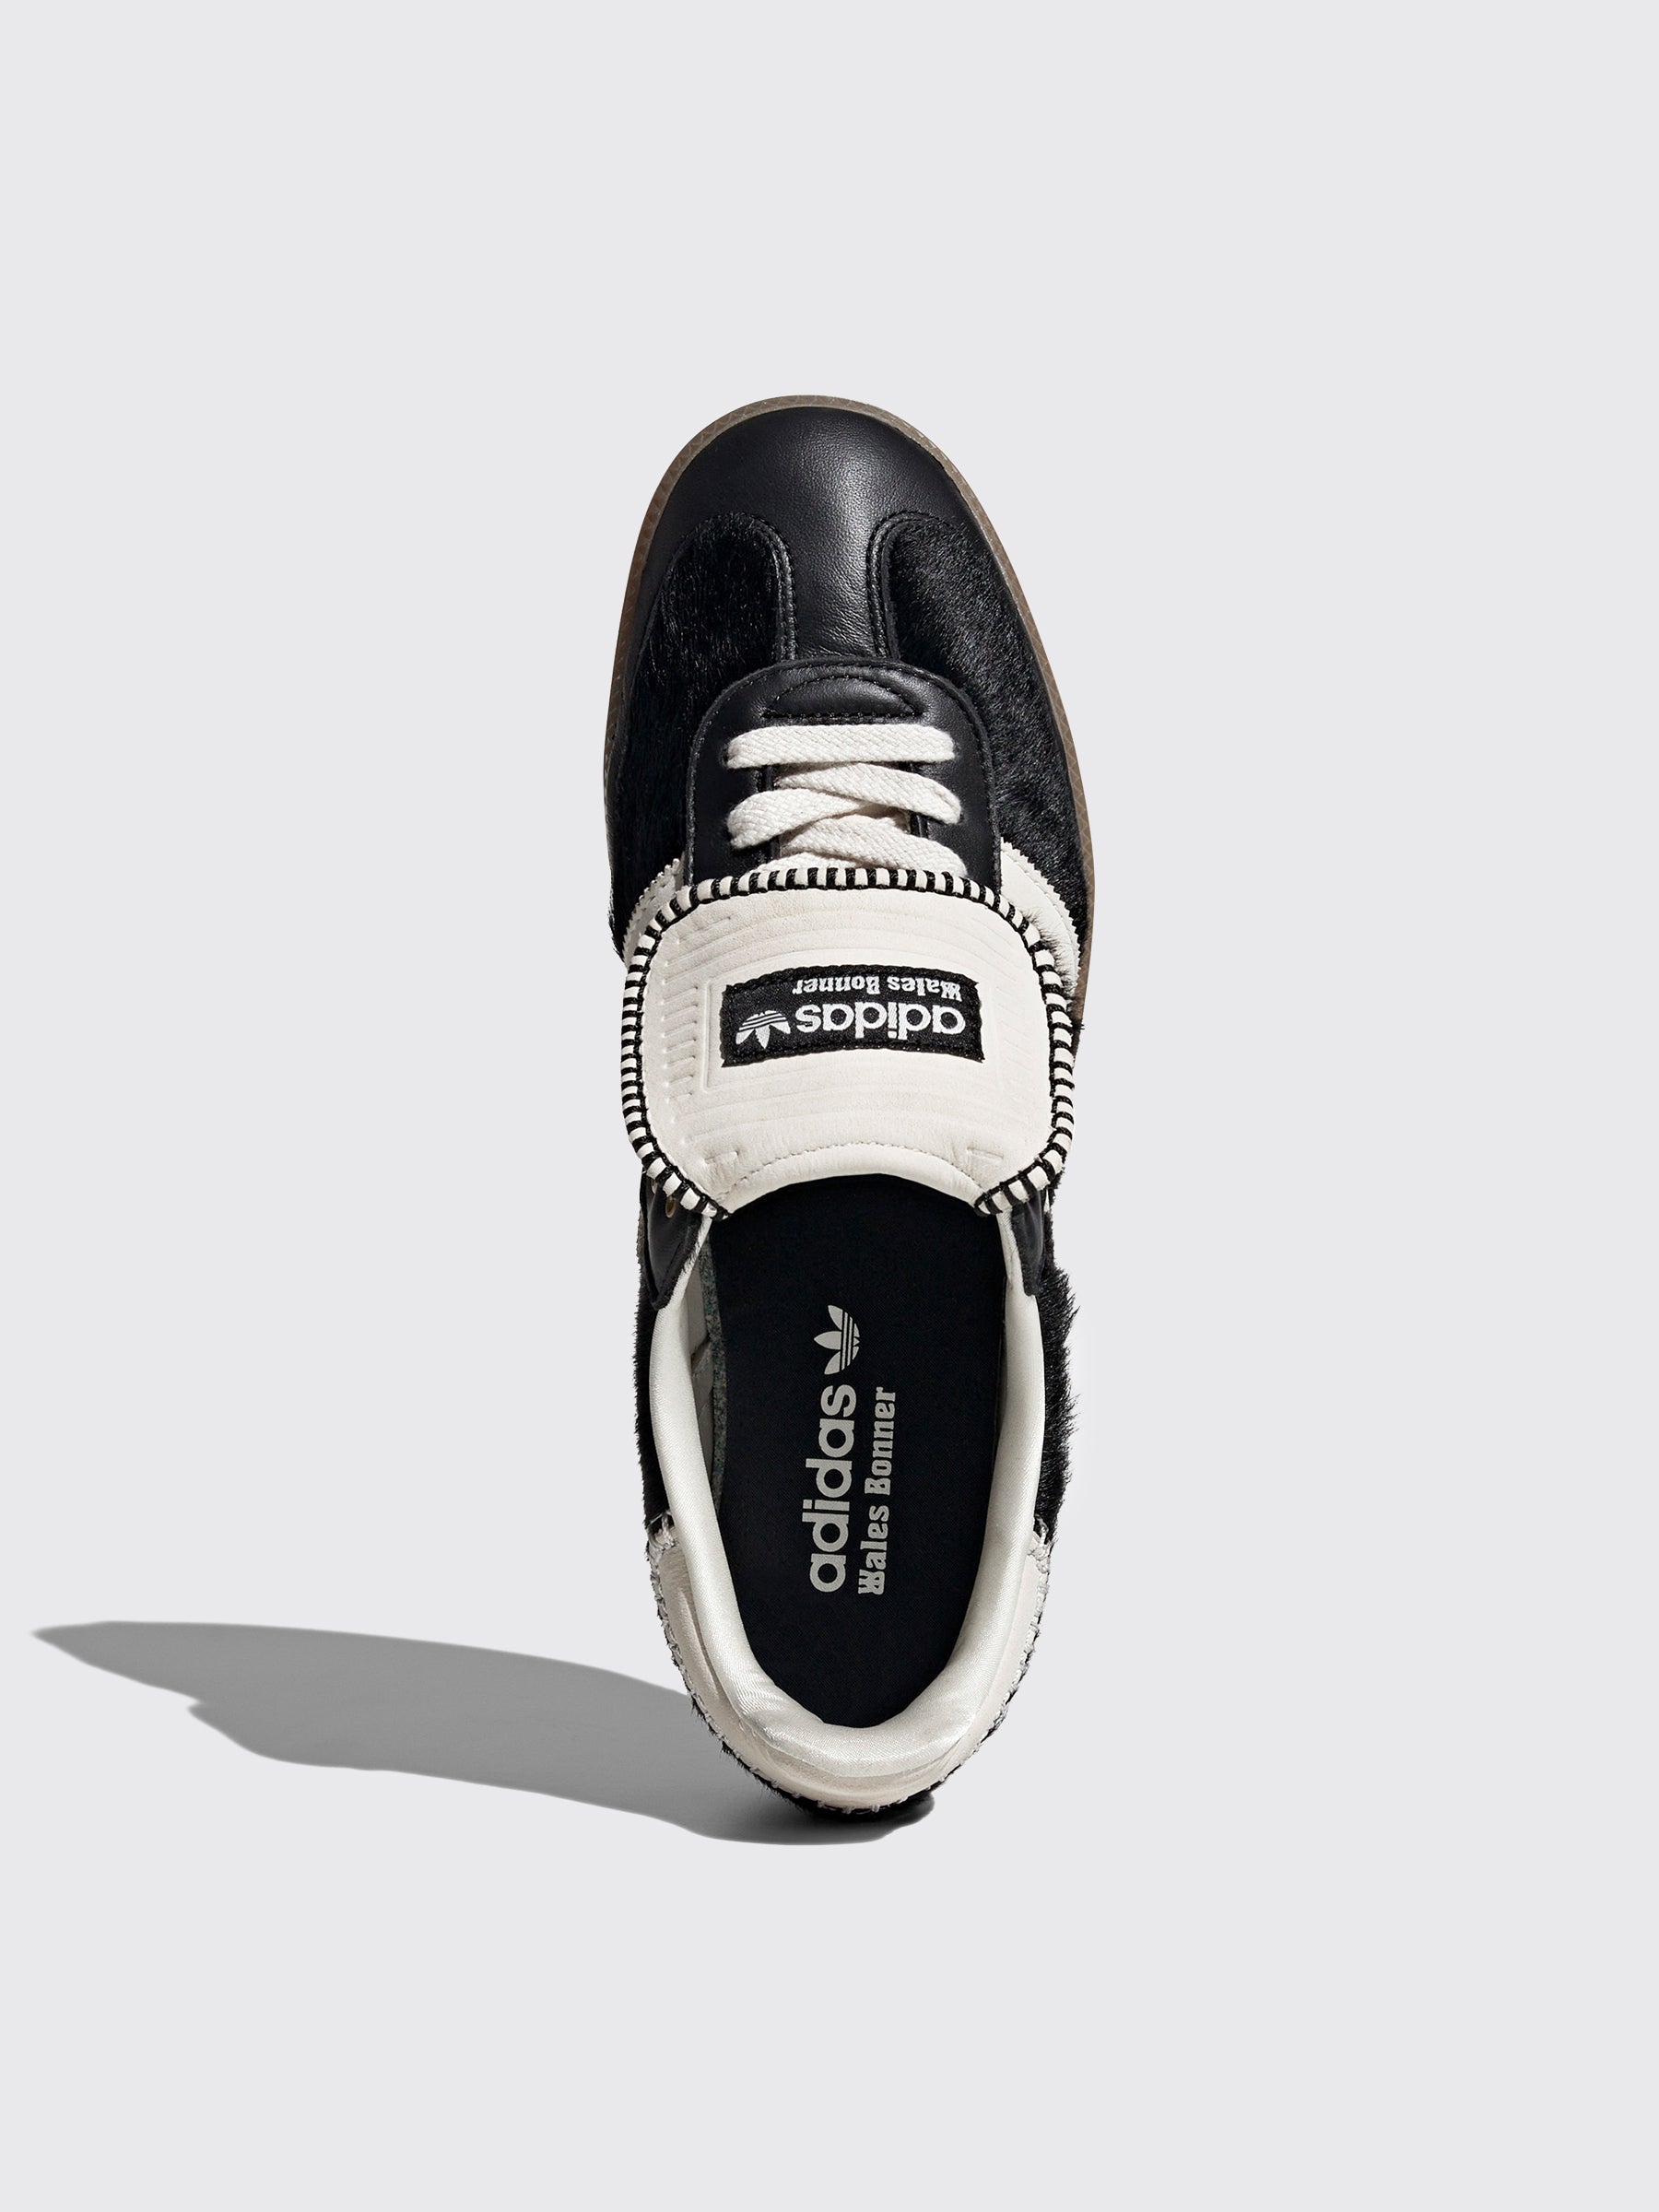 adidas Originals by Wales Bonner Pony Tonal Samba Core Black / Cream White